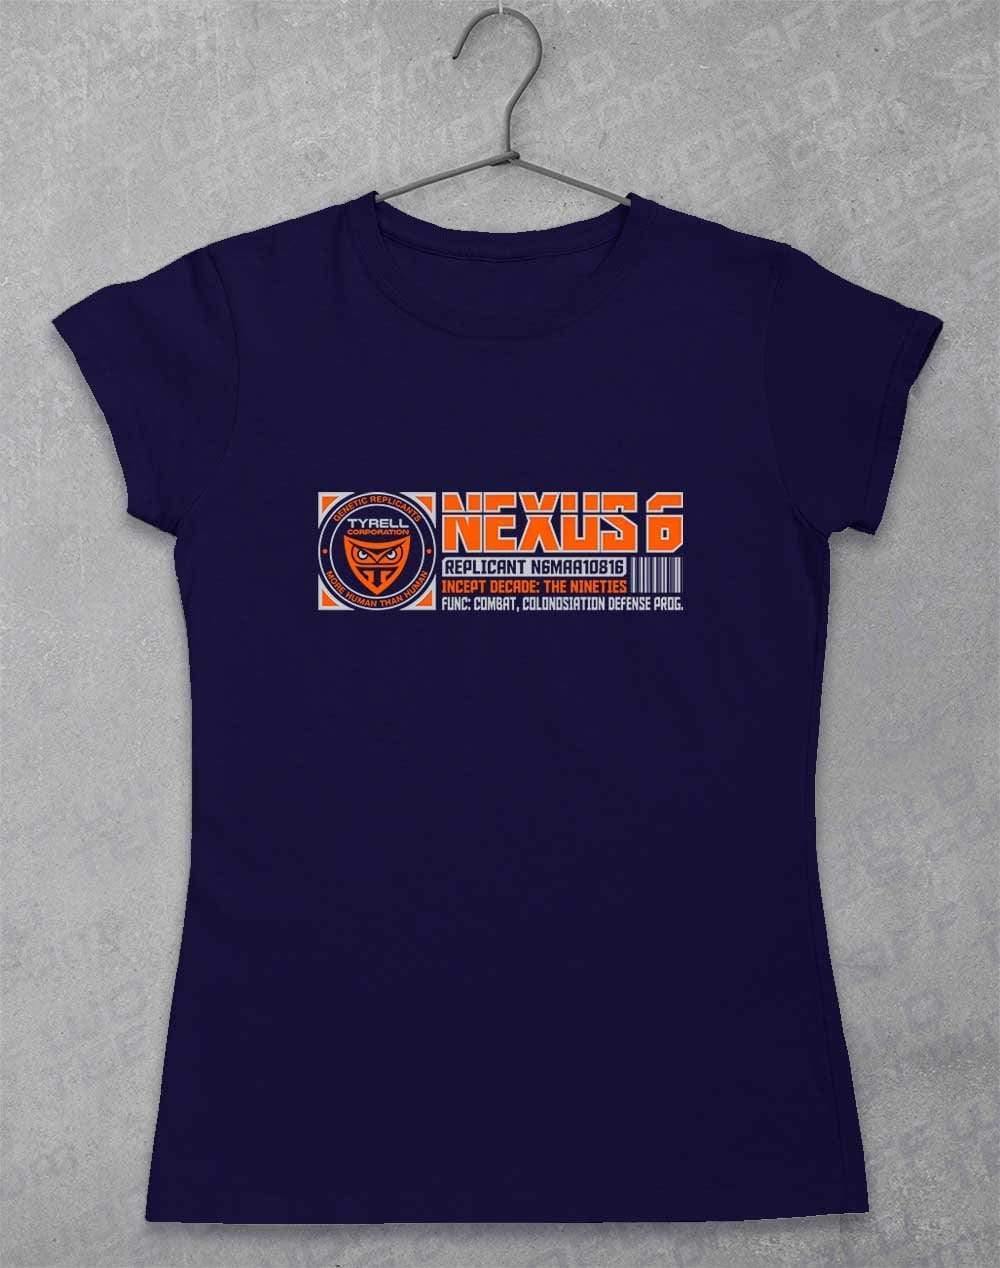 Nexus 6 Replicant Incept Date (CHOOSE YOUR DECADE!) Women's T-Shirt The Nineties - Navy / 8-10  - Off World Tees